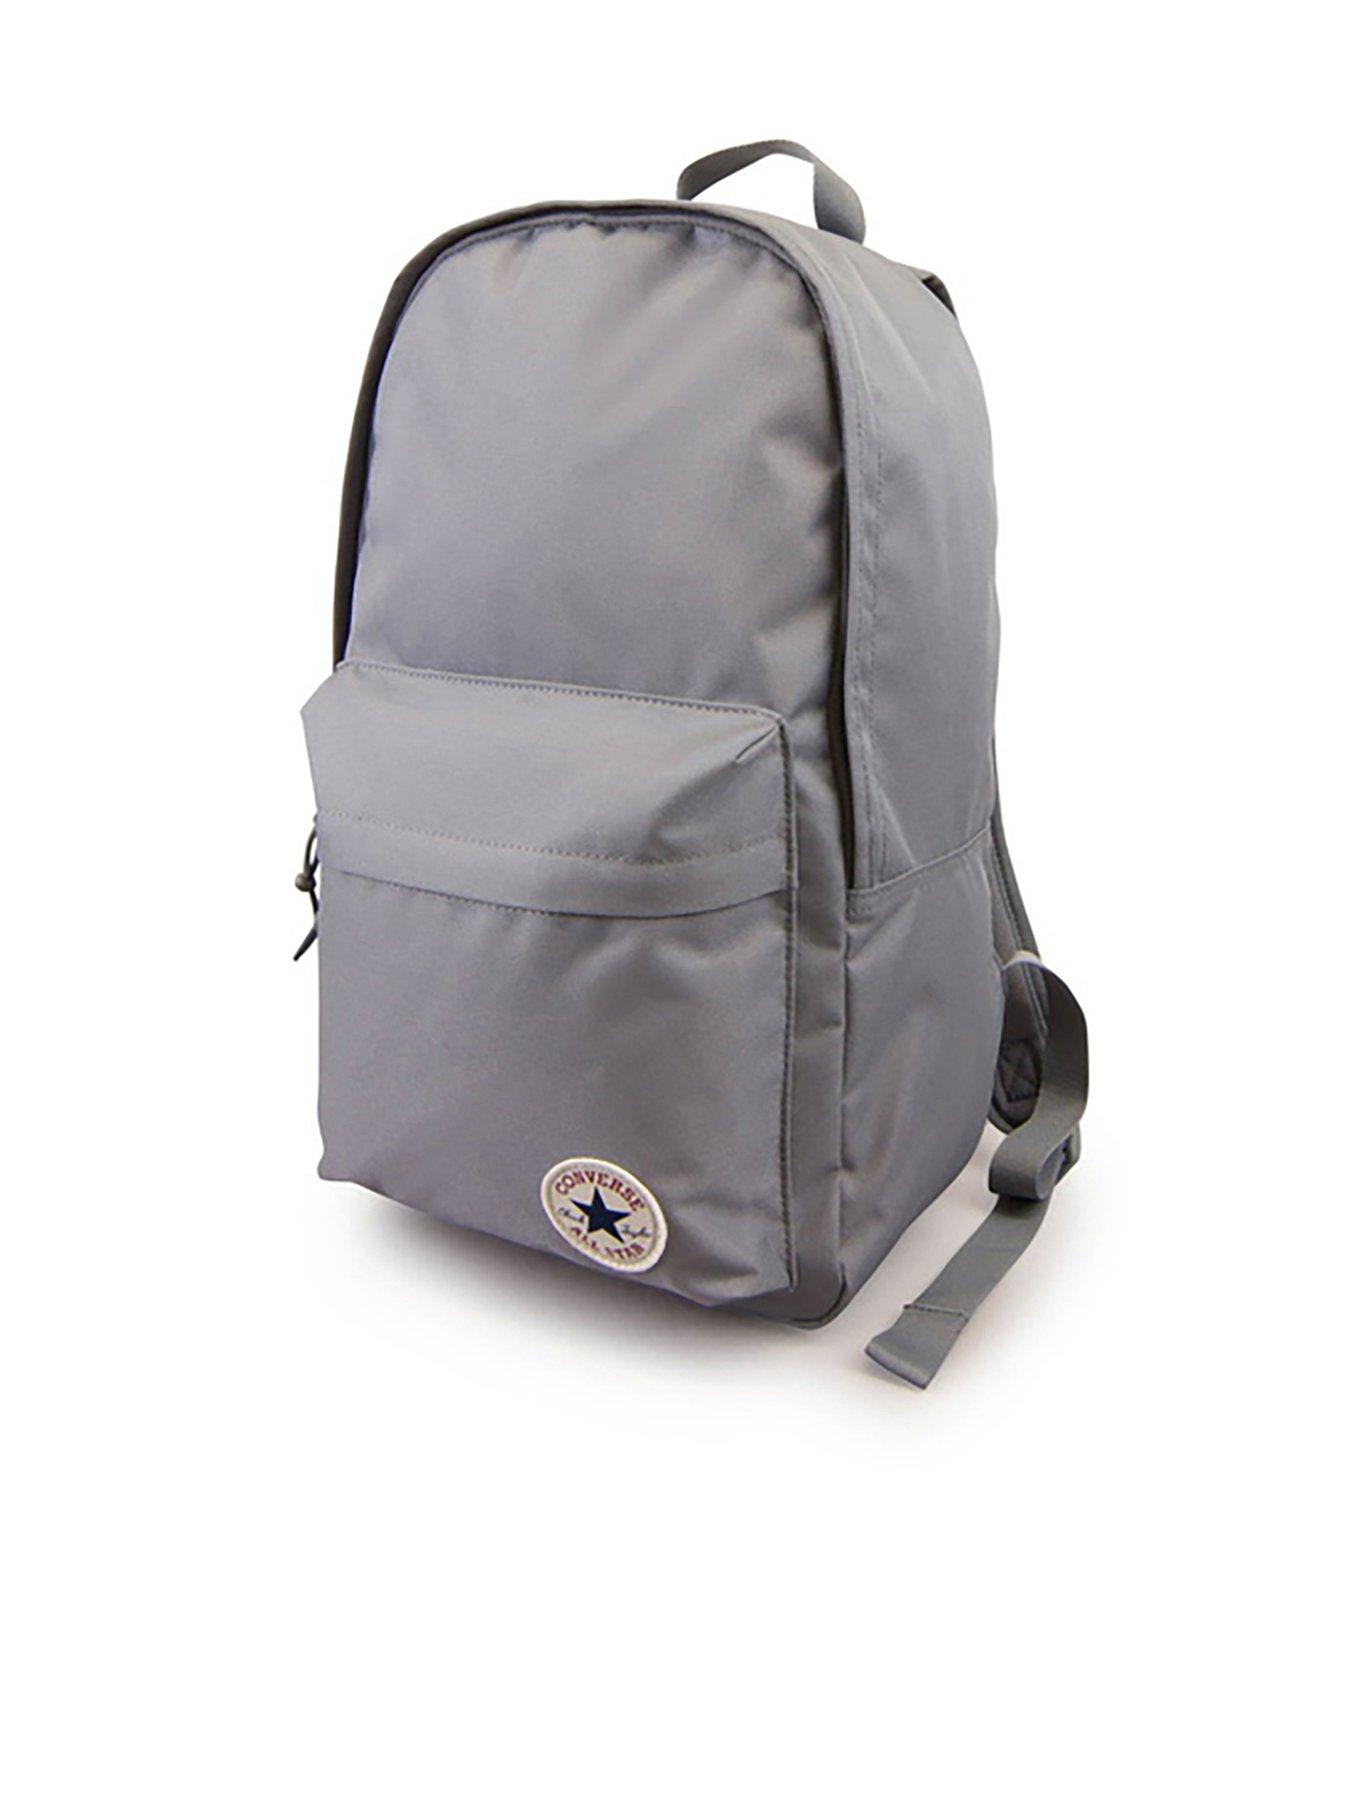 converse backpack uk